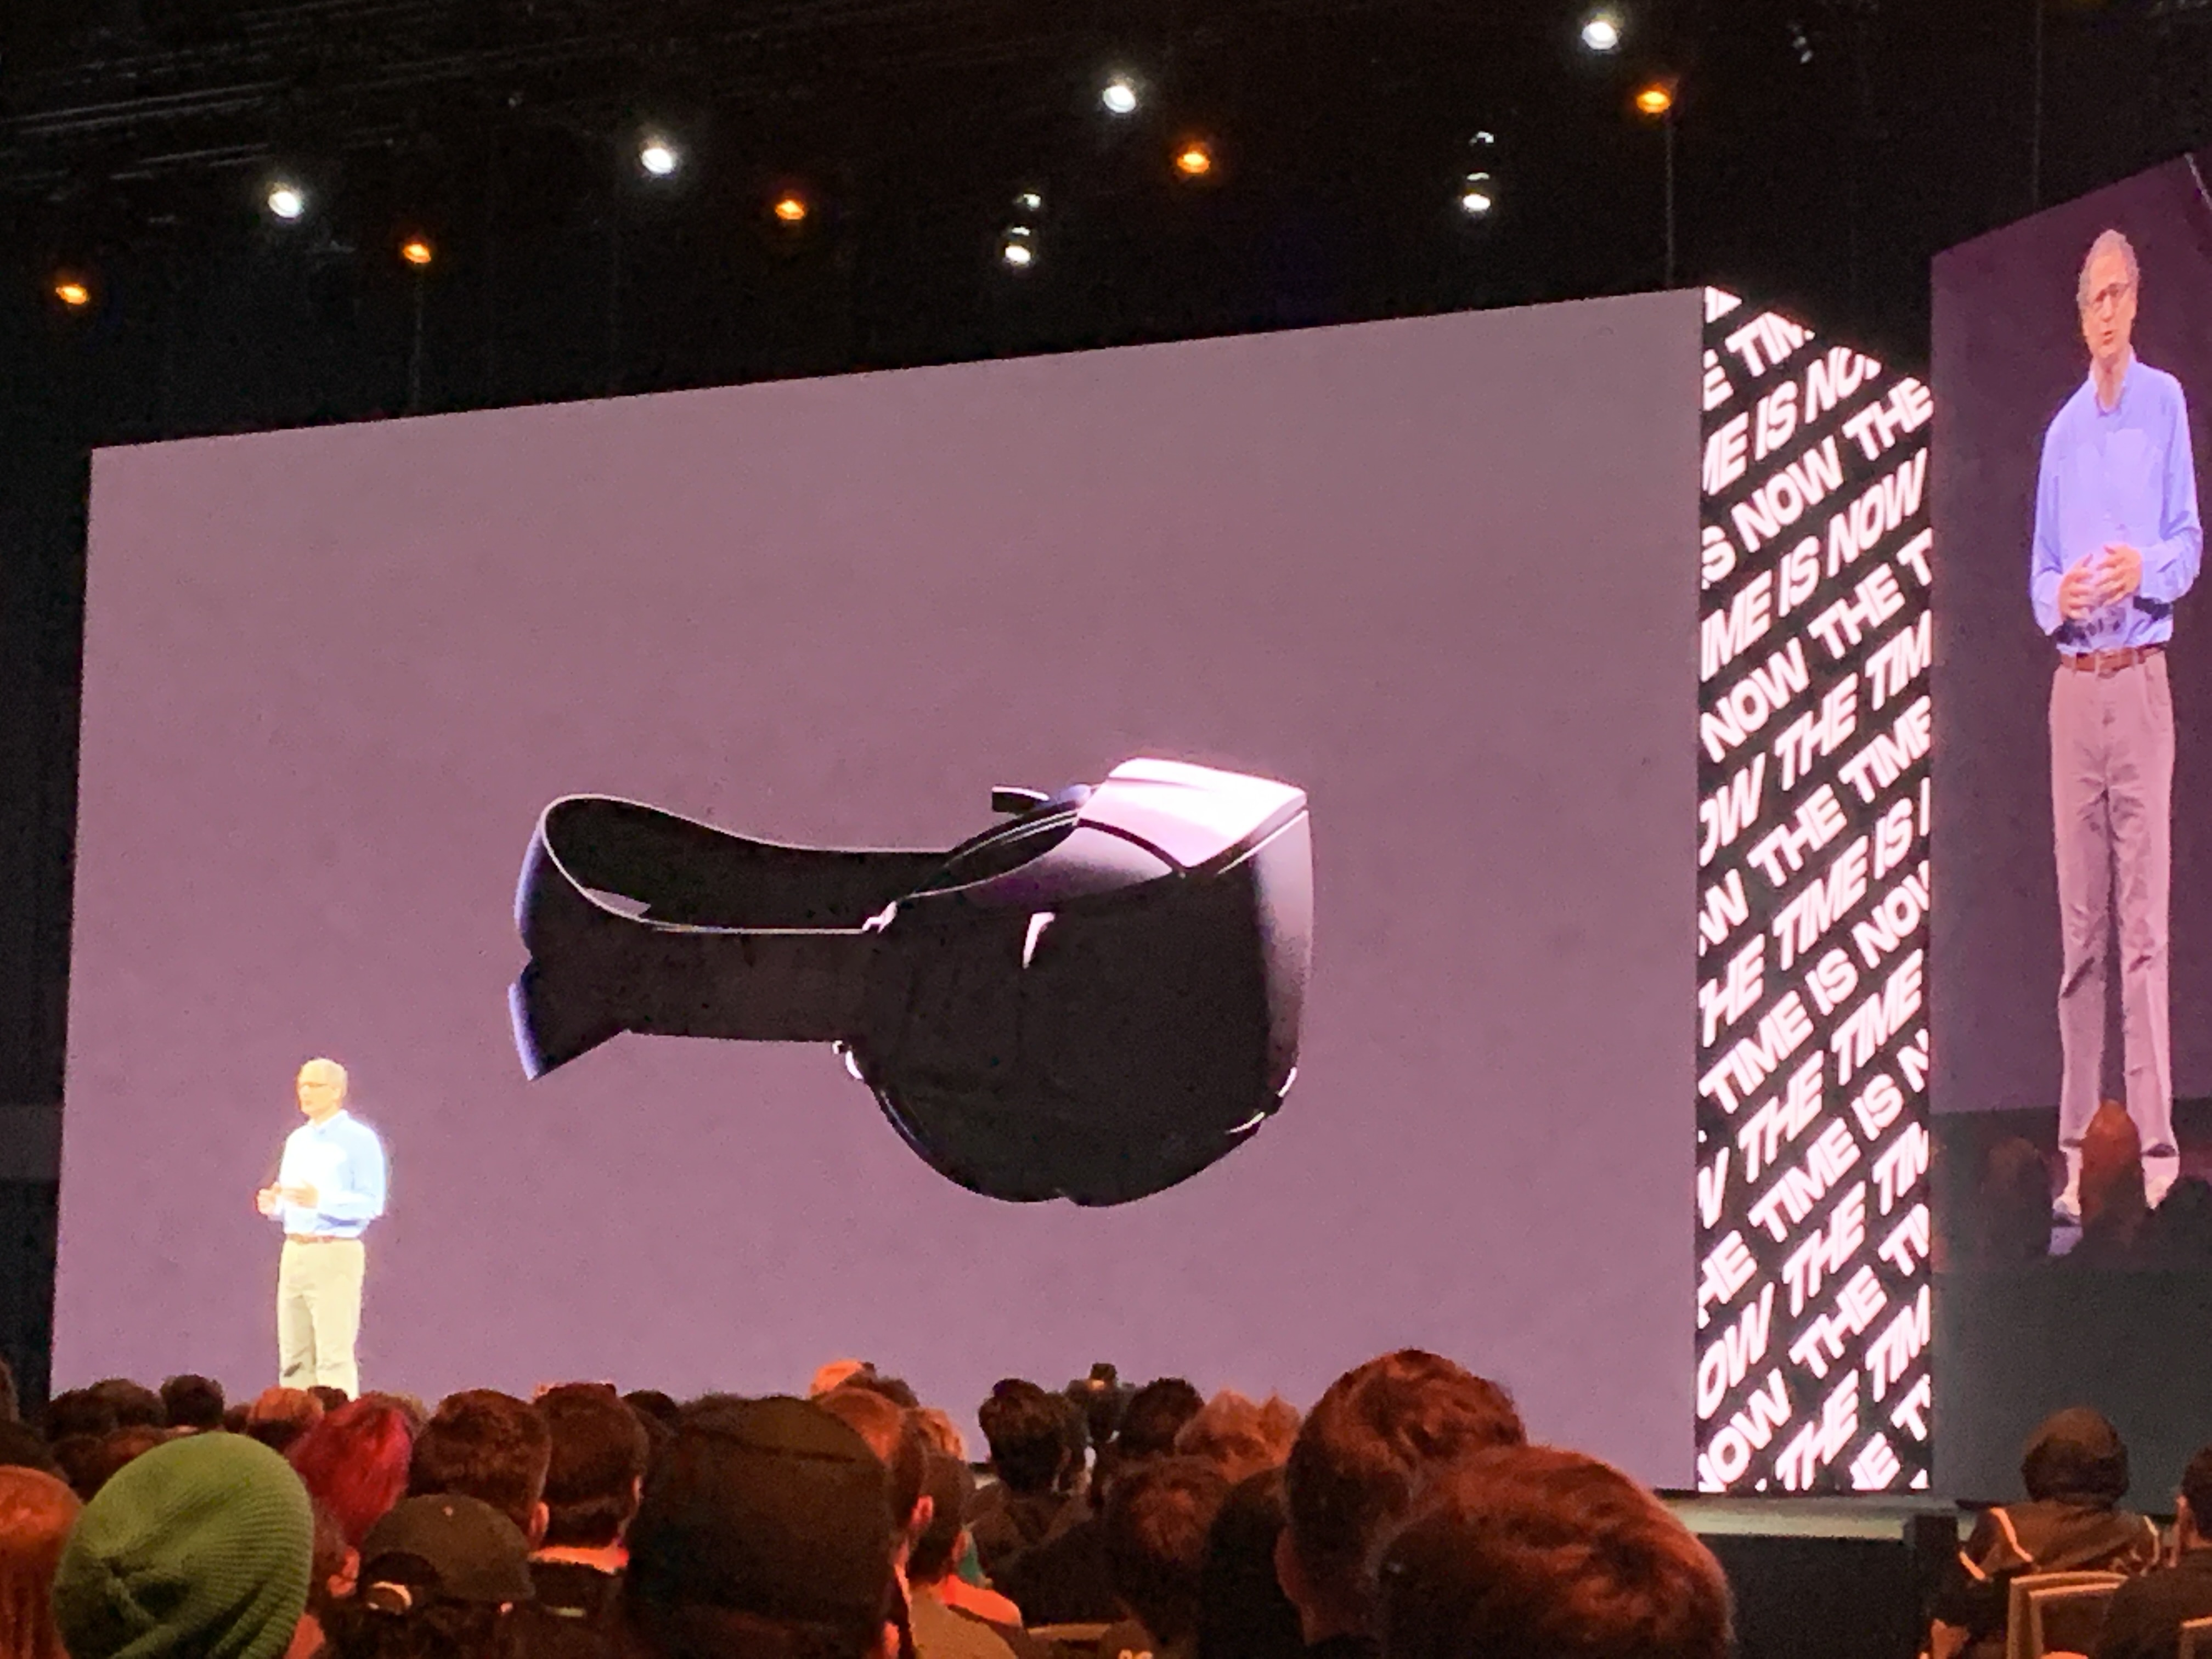 Ventilere spille klaver sympatisk Oculus shows off its latest next-generation headset prototypes | TechCrunch